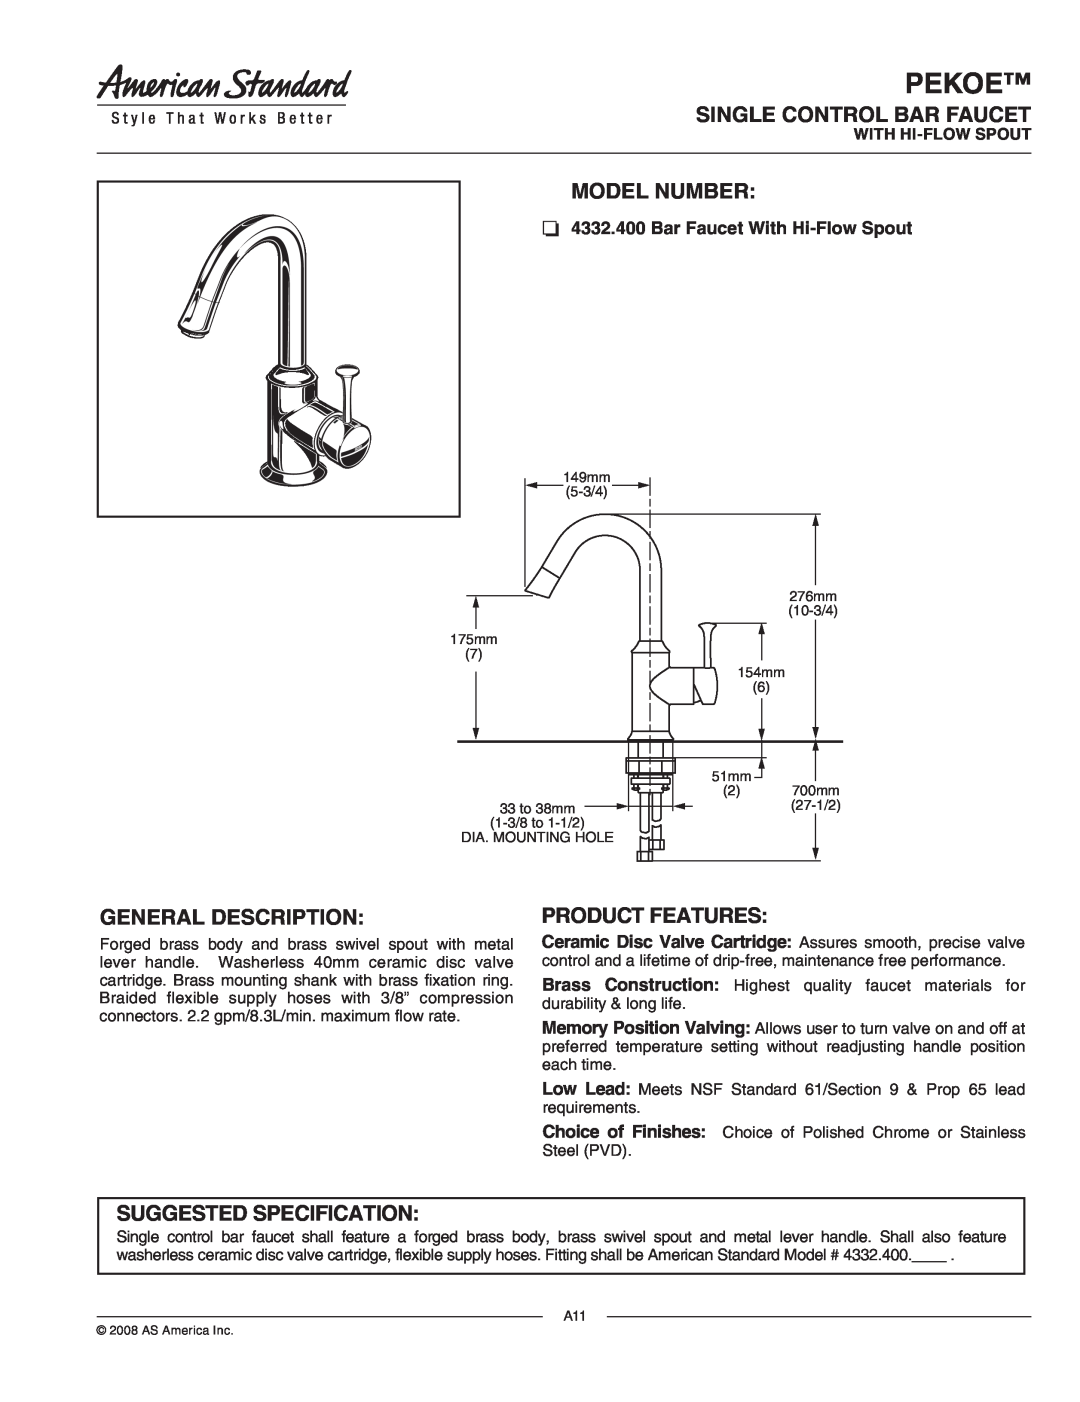 American Standard 4332.400 specifications Pekoe, Single Control Bar Faucet, Model Number, General Description 